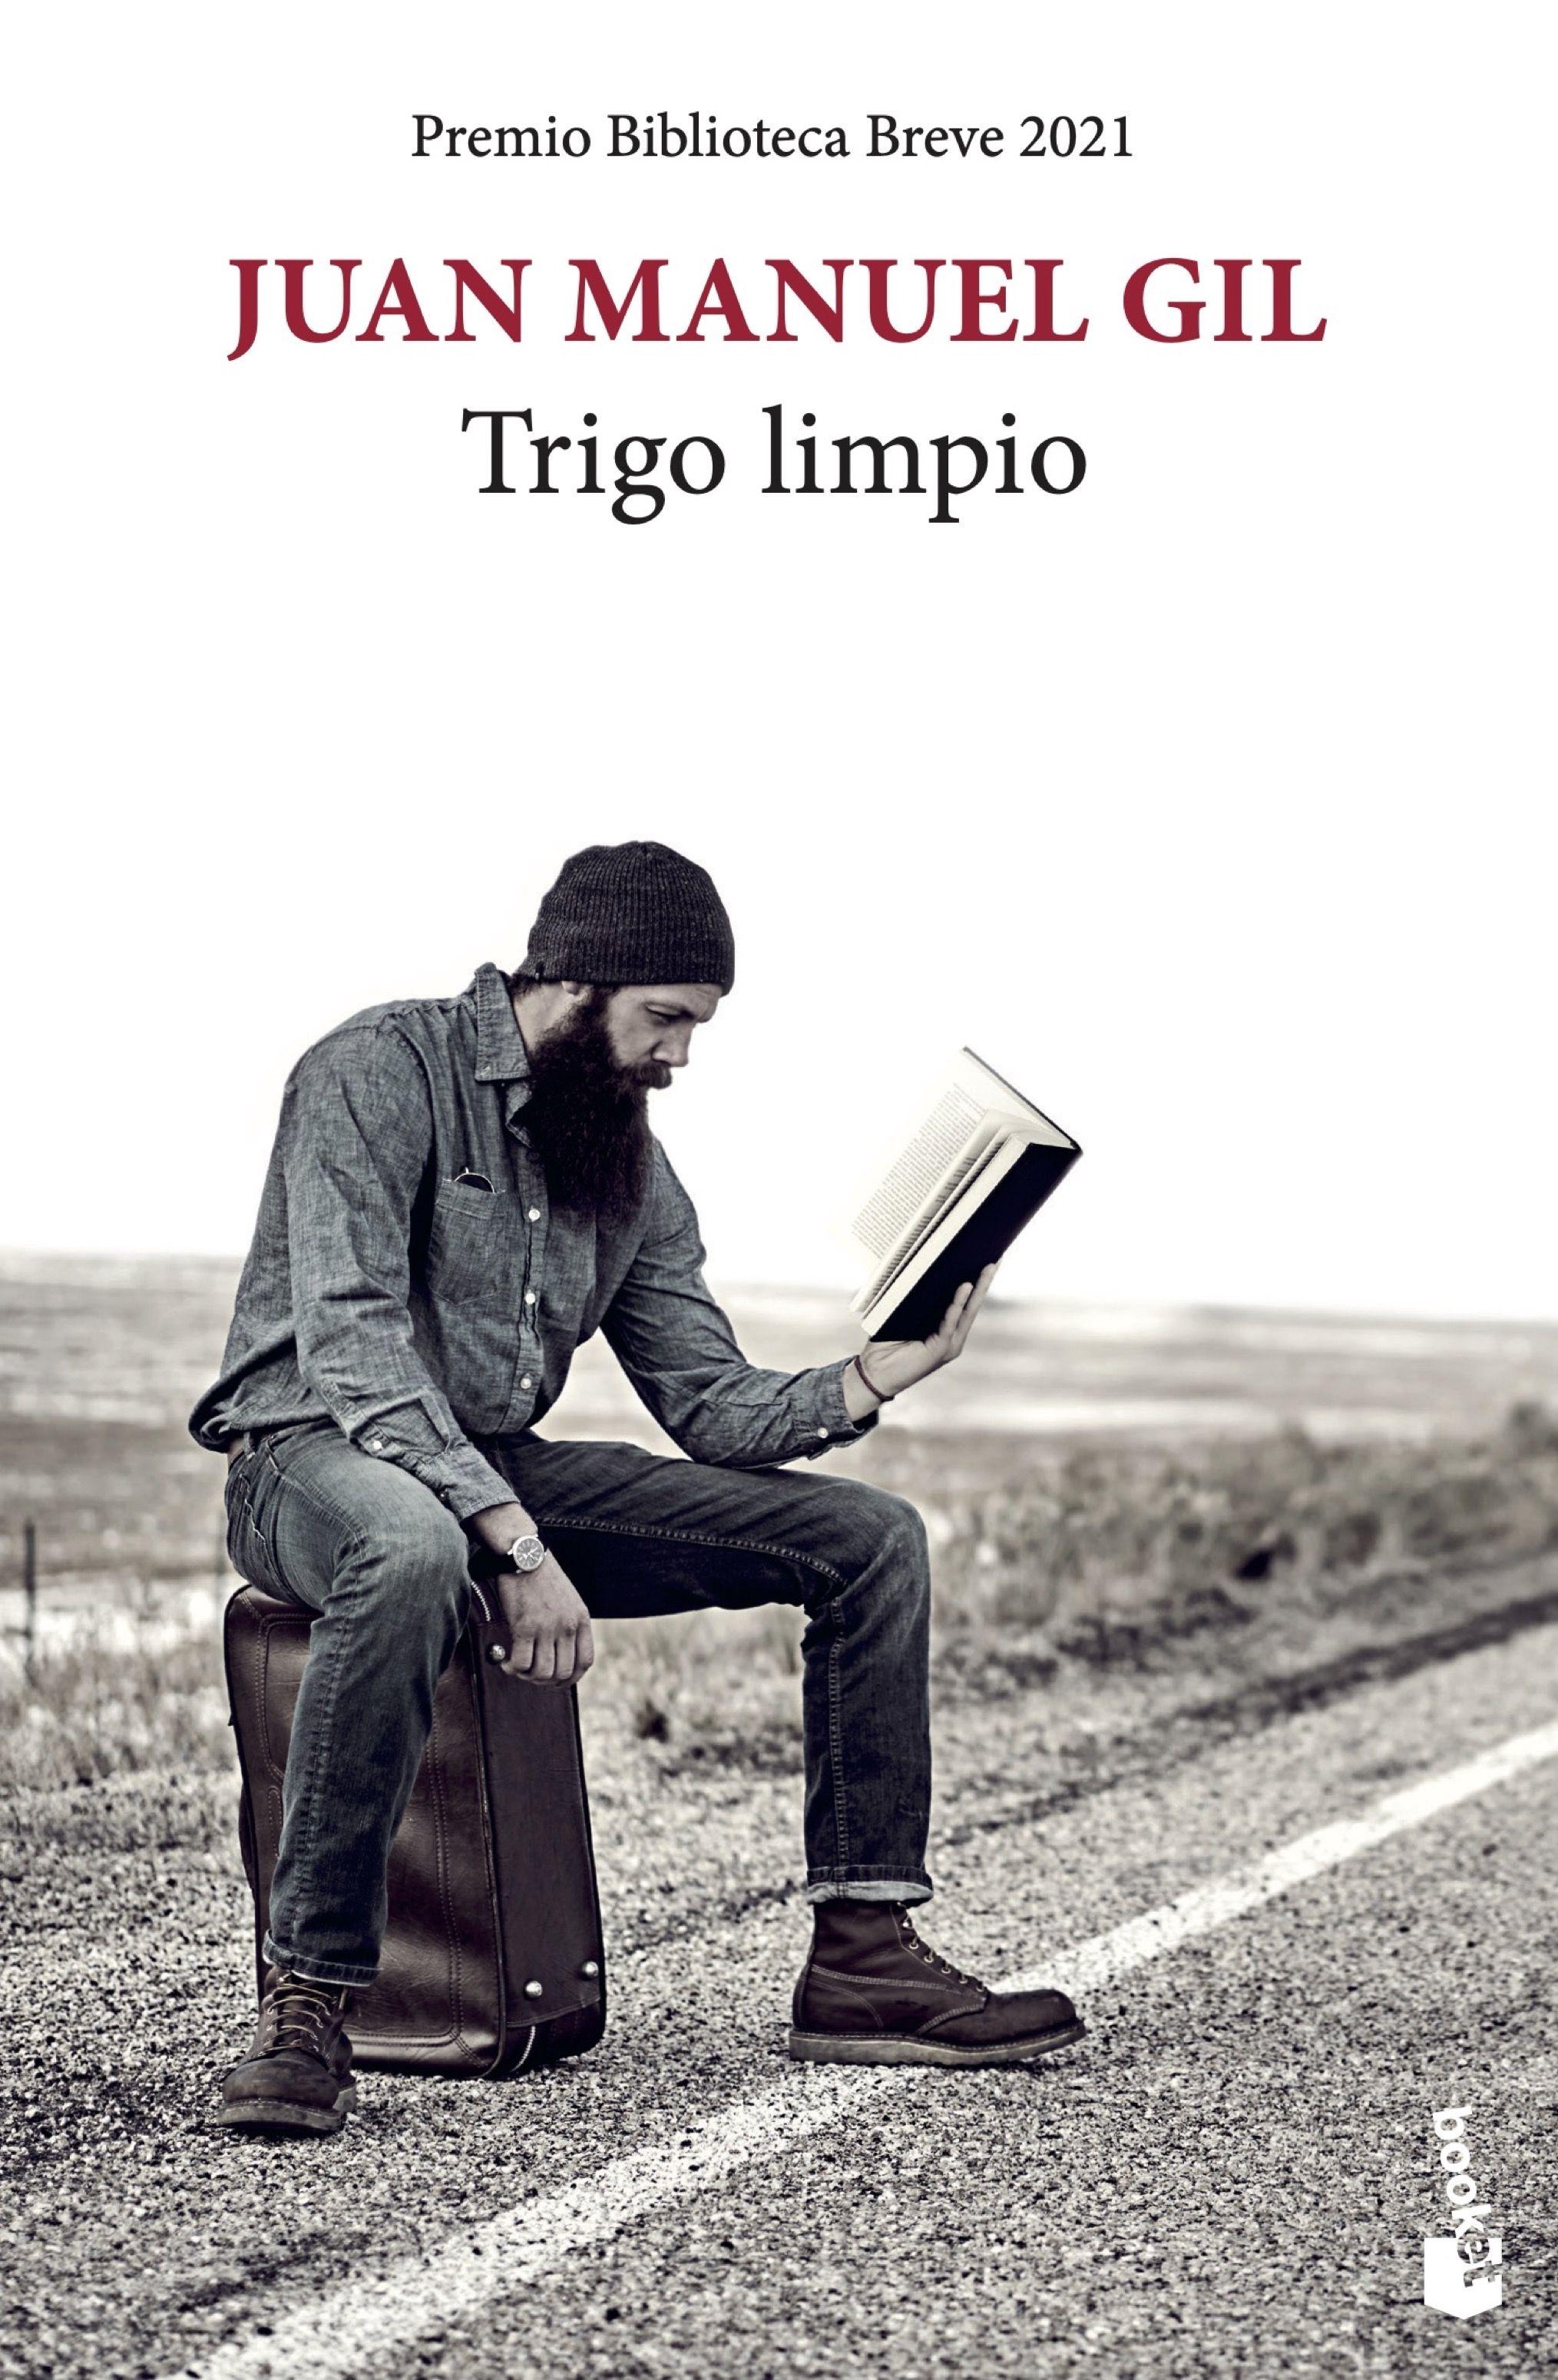 Trigo Limpio "Premio Biblioteca Breve 2021"